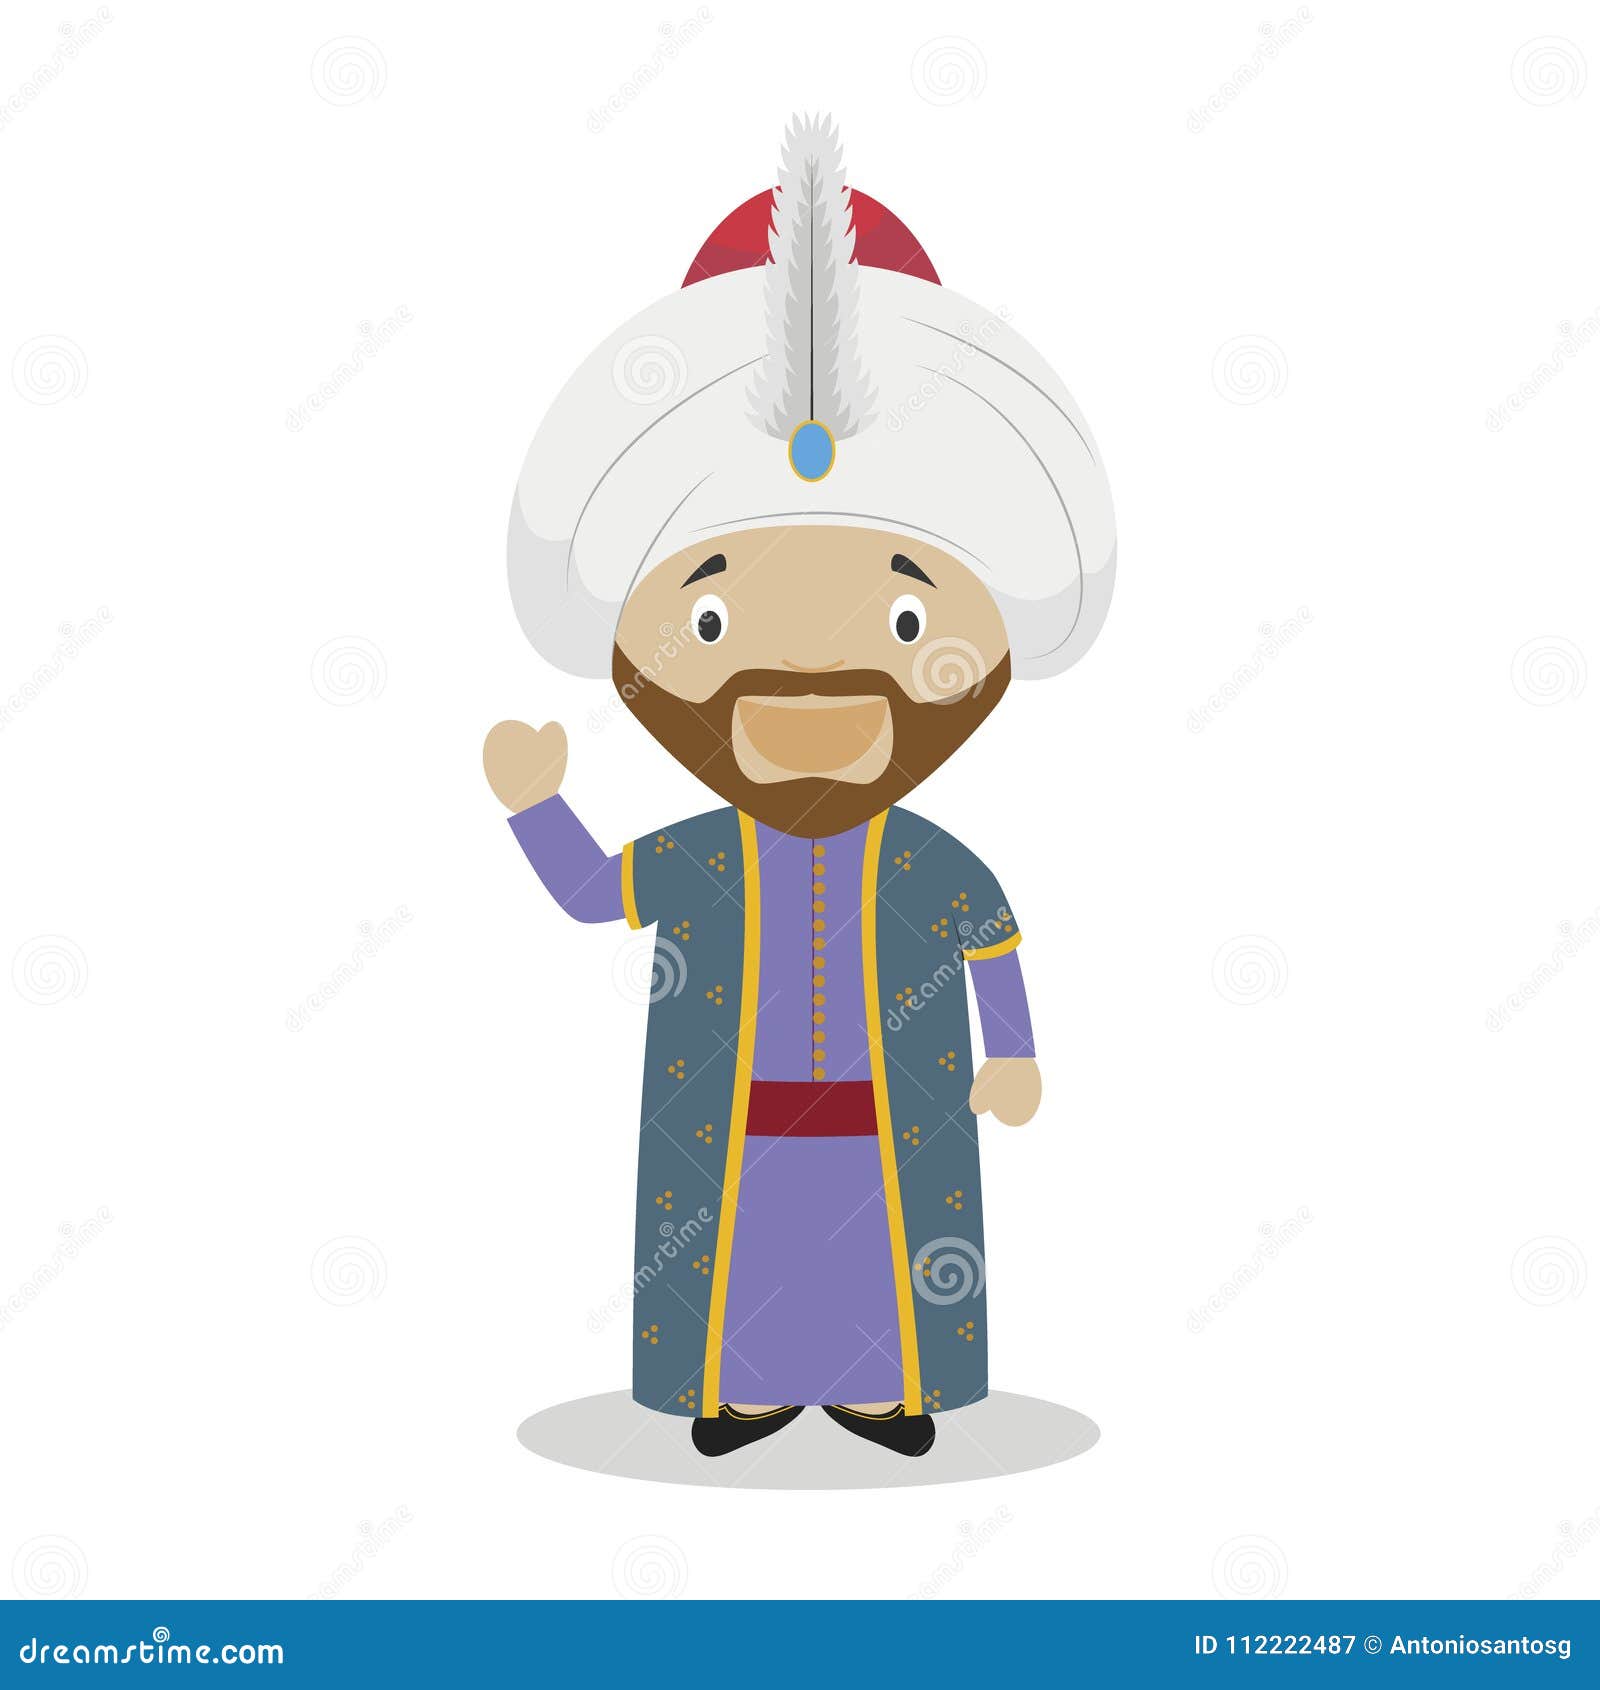 sultan mehmed ii the conqueror cartoon character.  